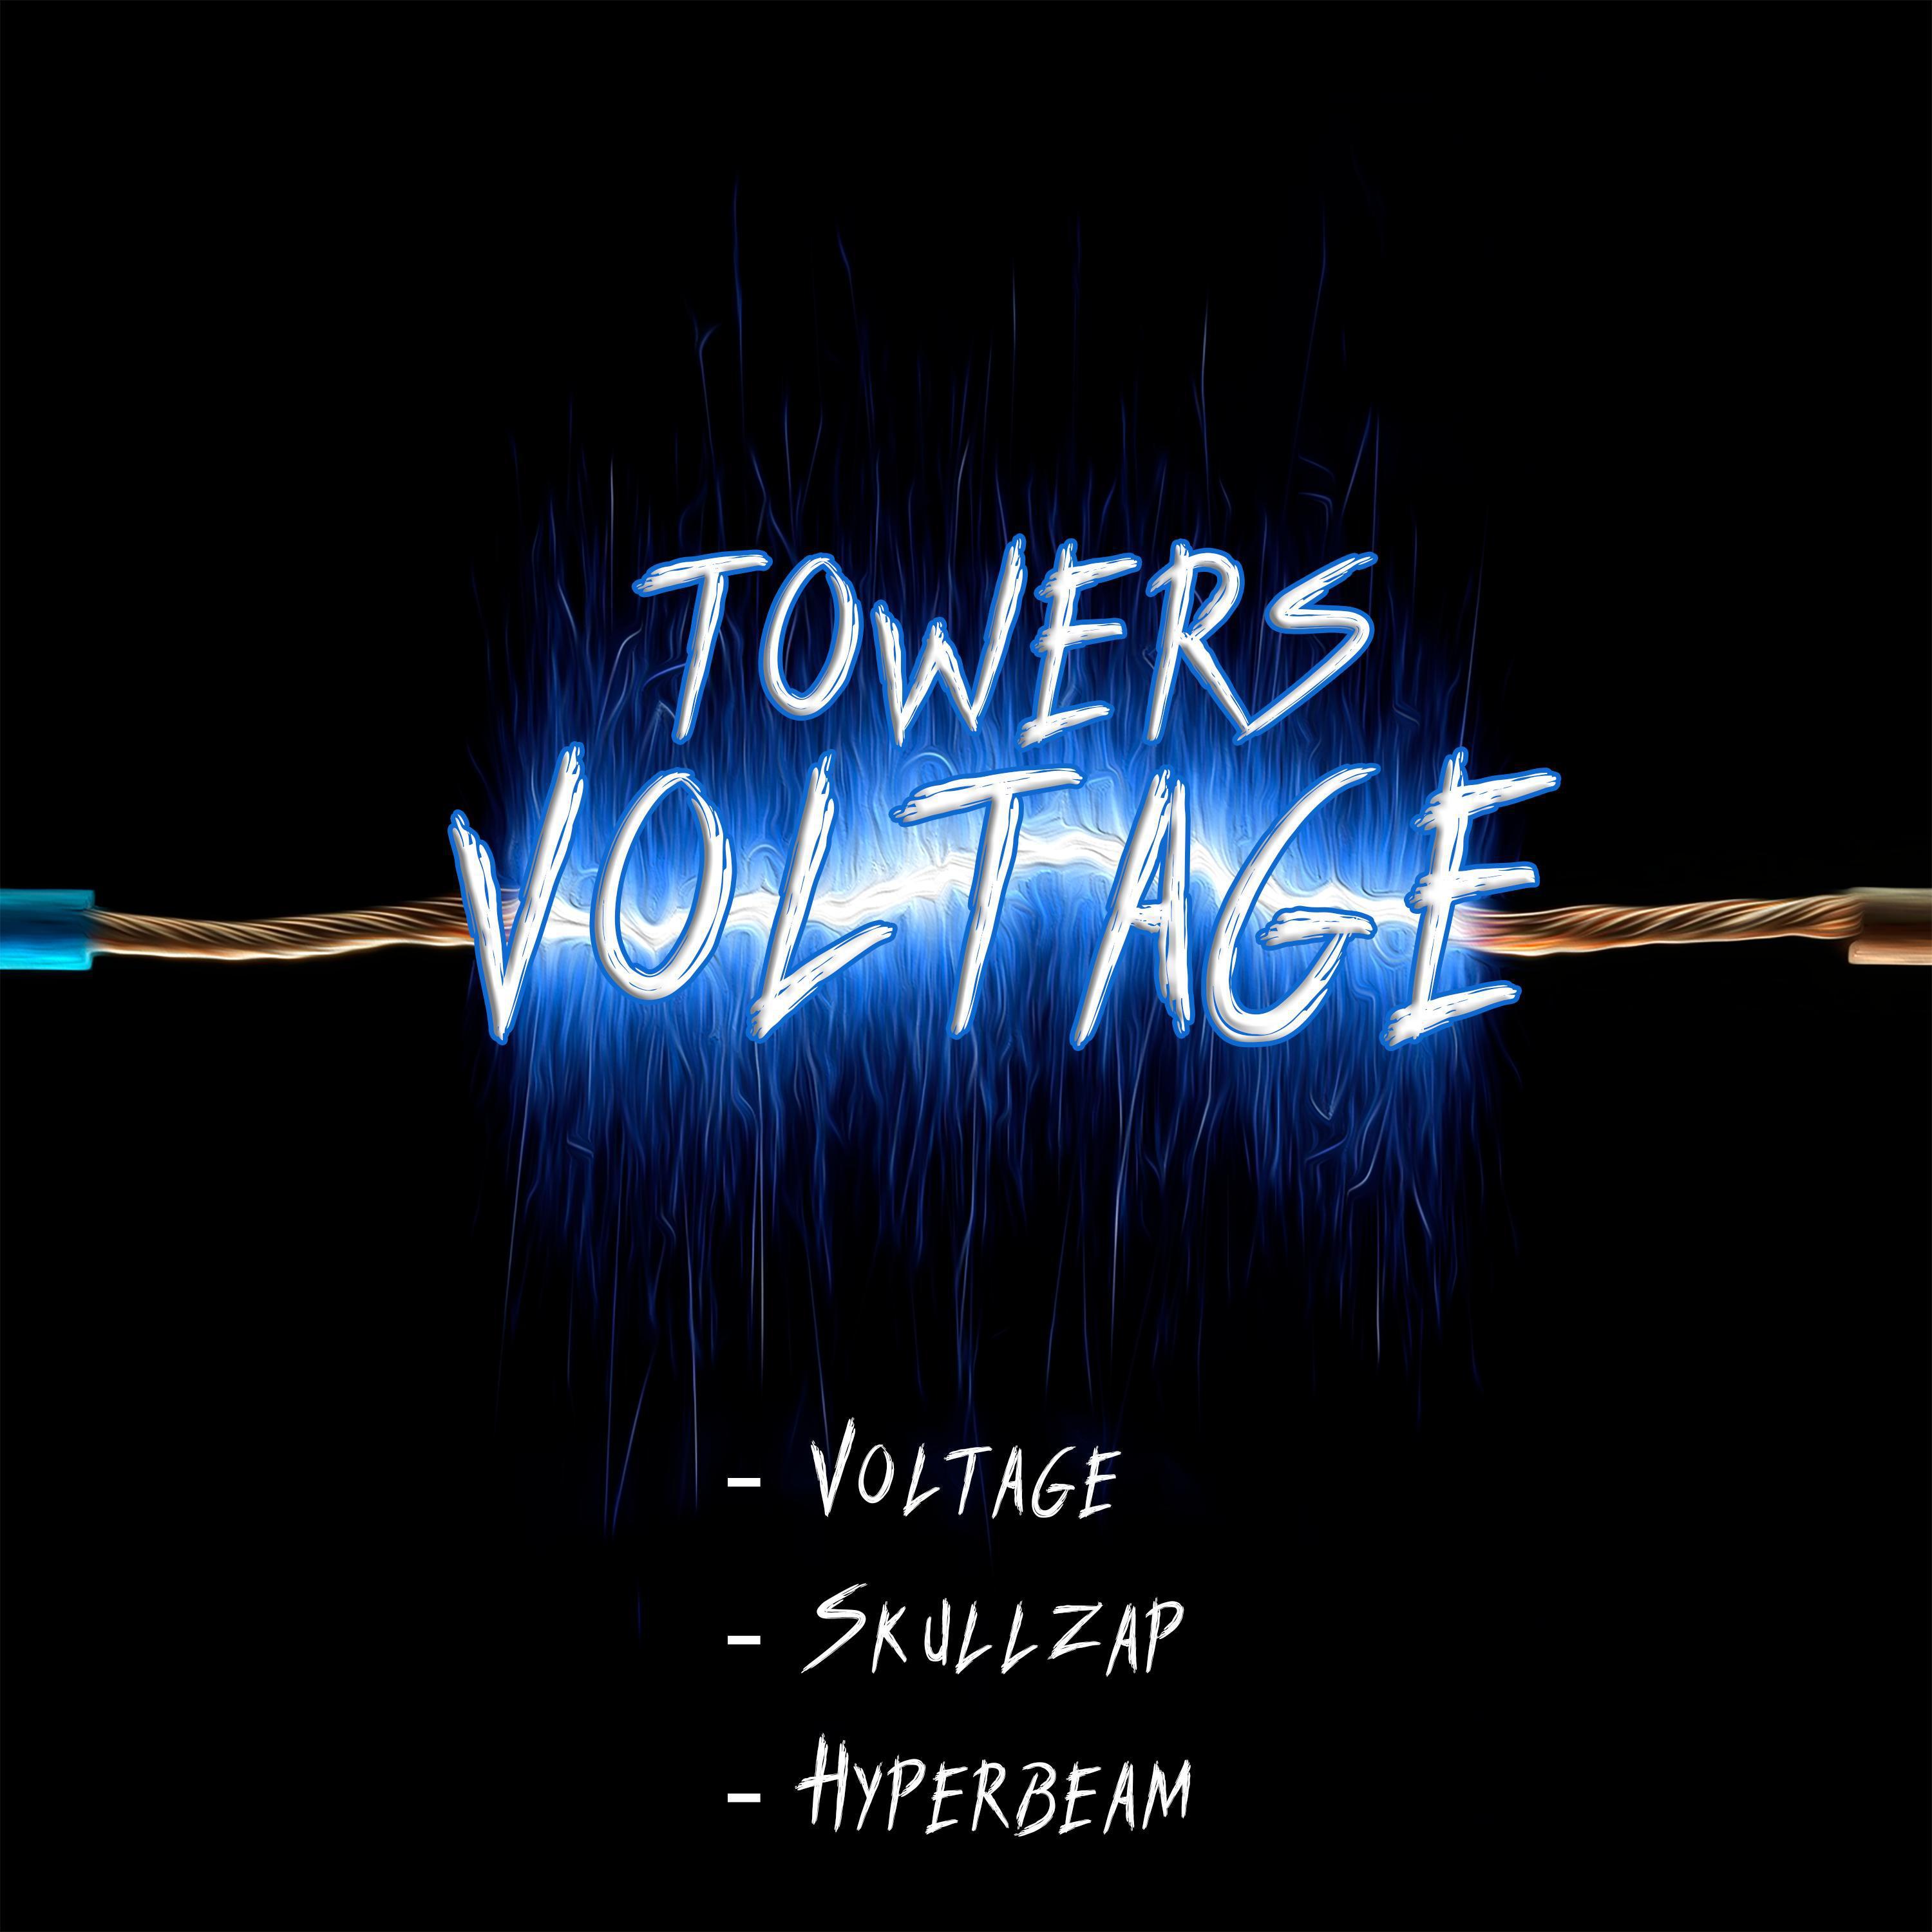 Towers - Hyperbeam